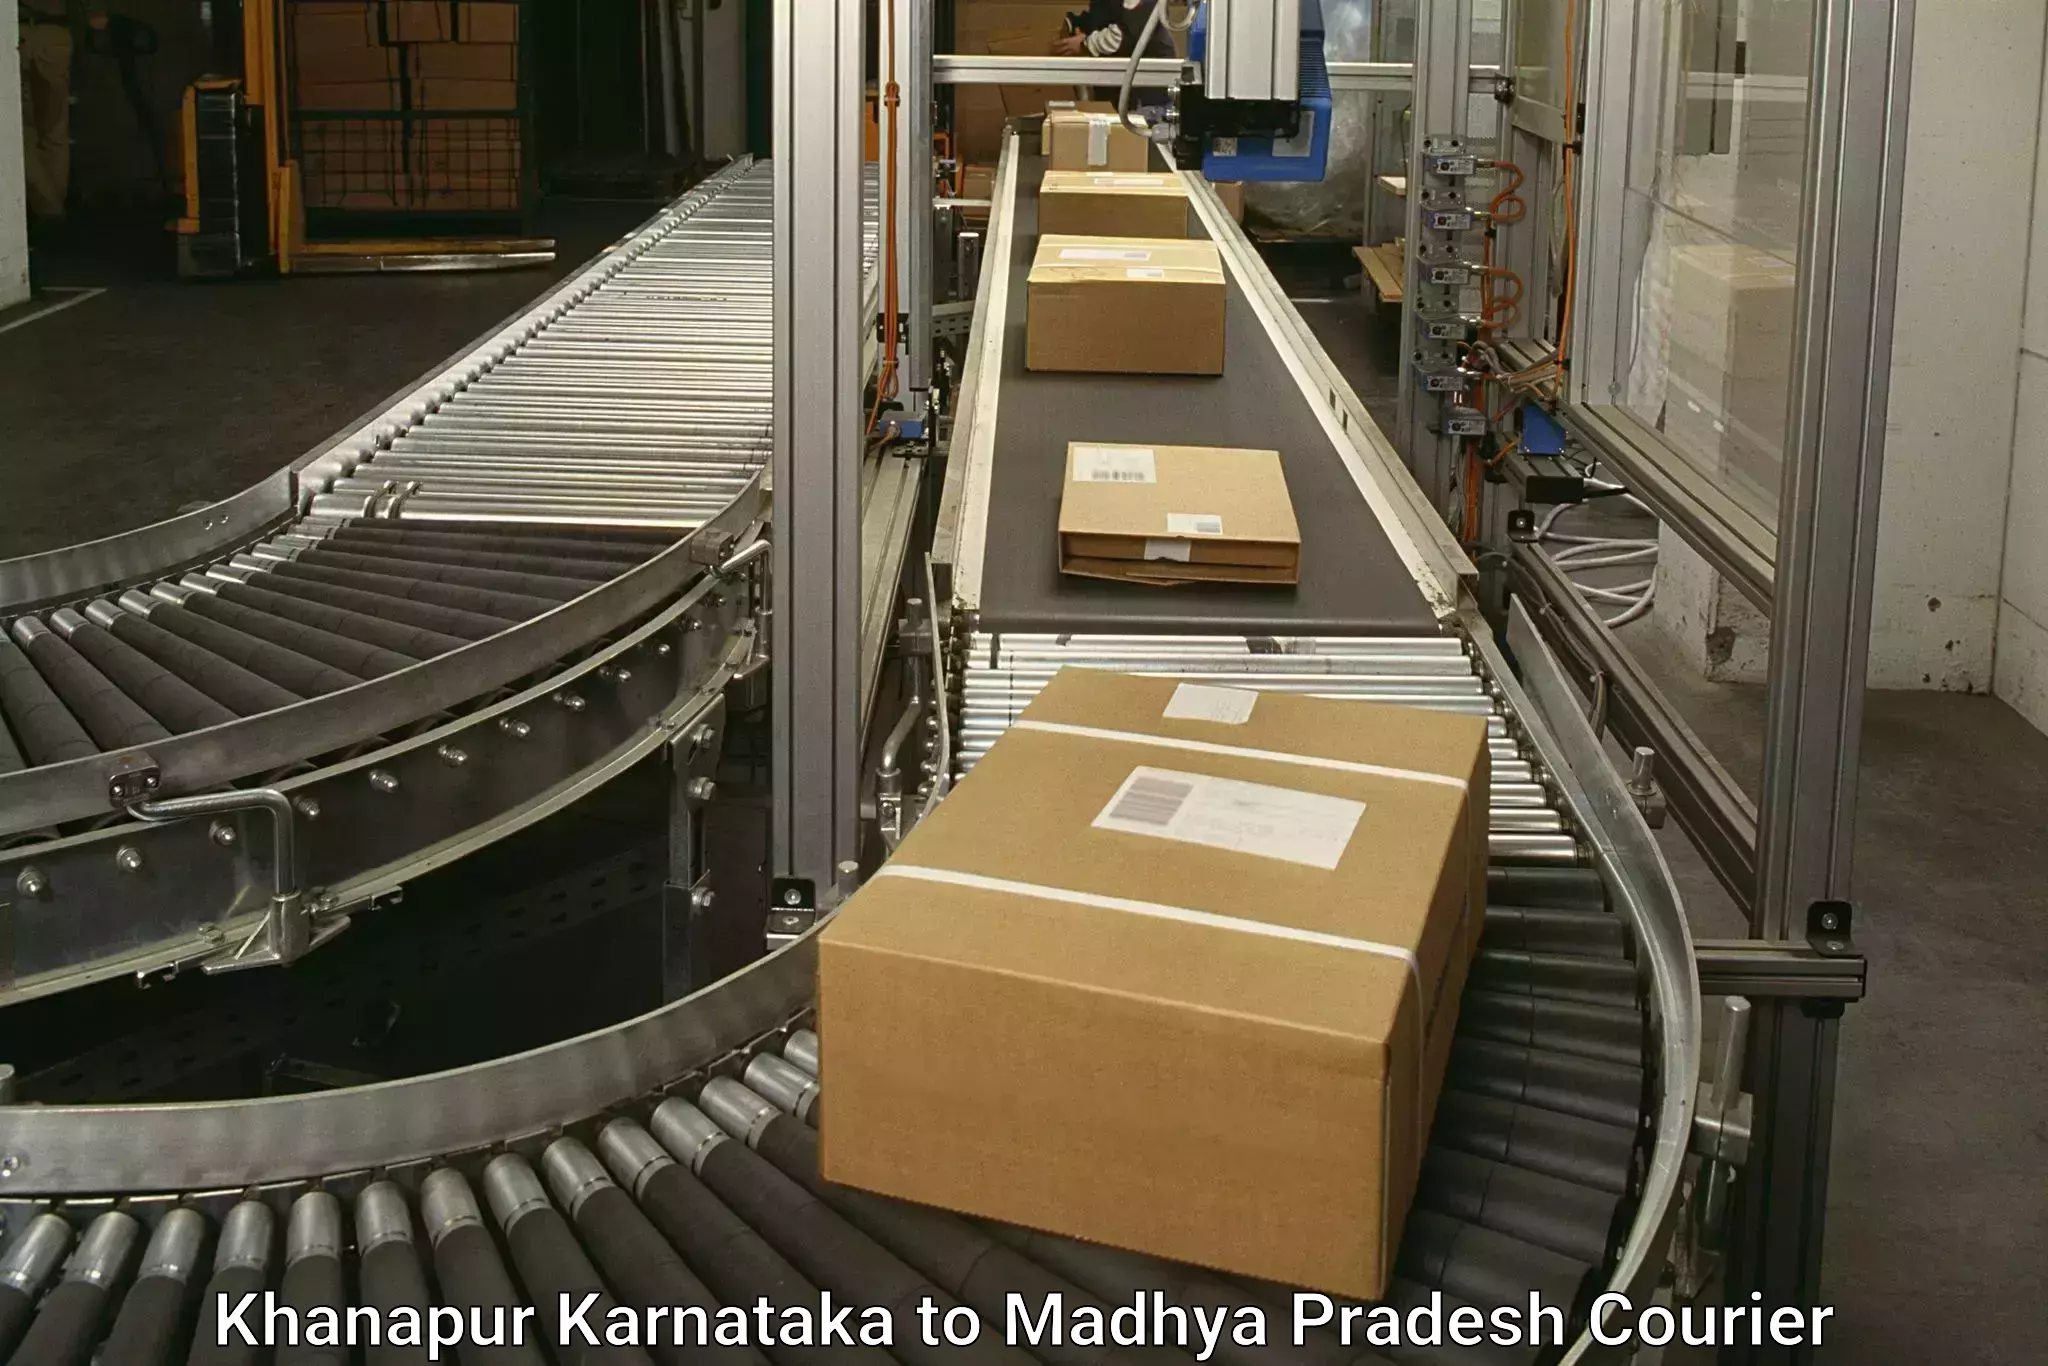 Medical delivery services in Khanapur Karnataka to Bhopal